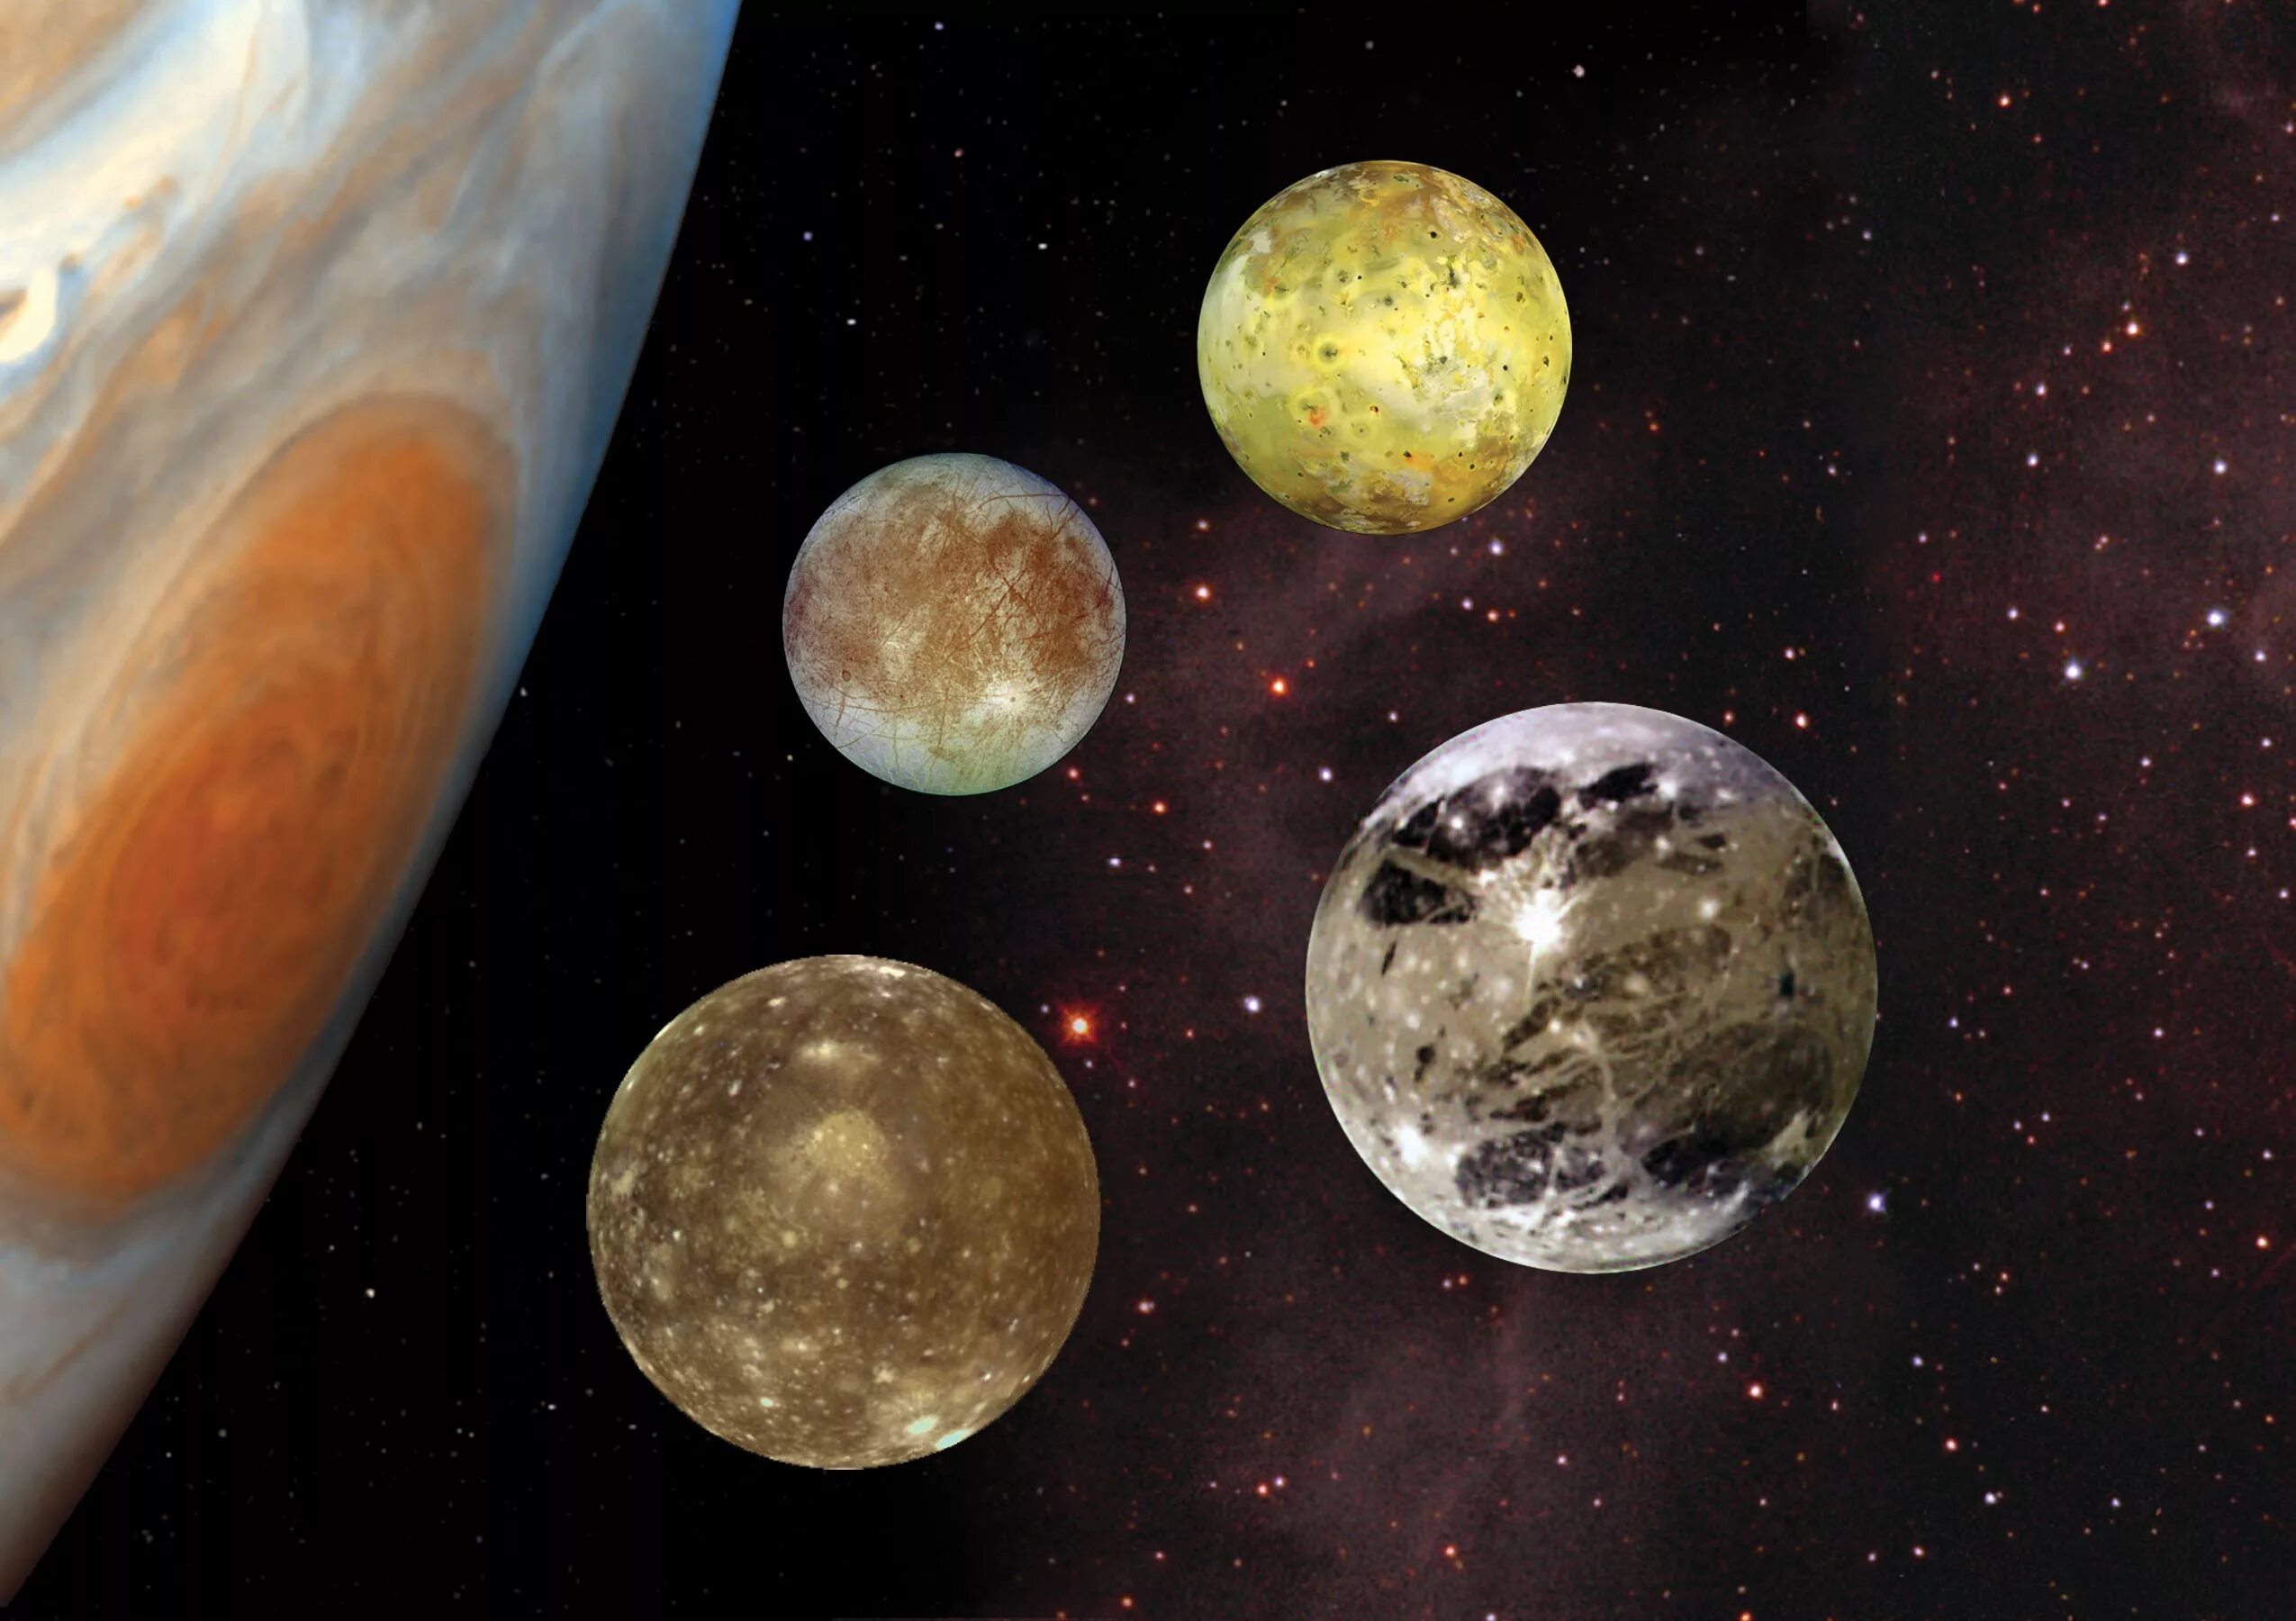 Галилеевы спутники Юпитера. Юпитер Планета спутники галилеевы. Каллисто Спутник Юпитера. Галилео Галилей спутники Юпитера.